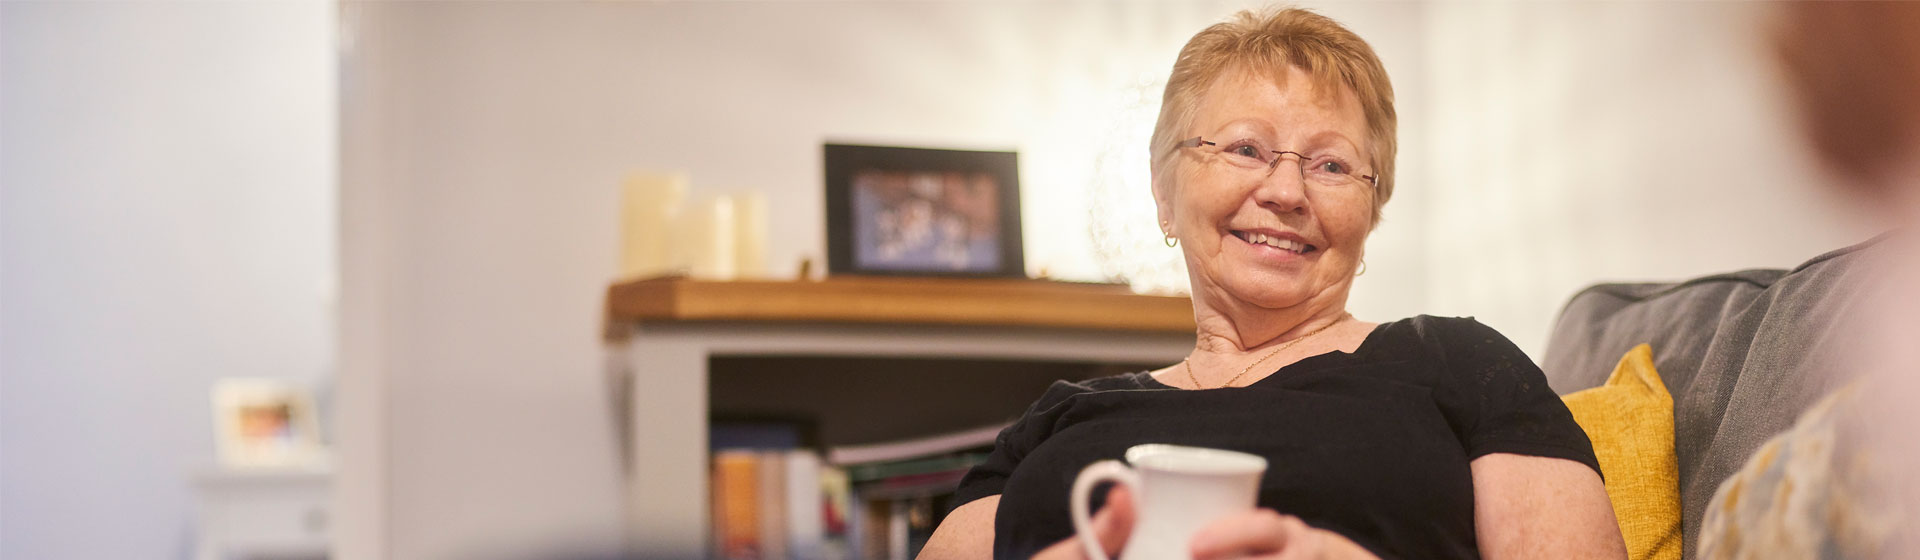 Elderly woman smiling holding a coffee mug